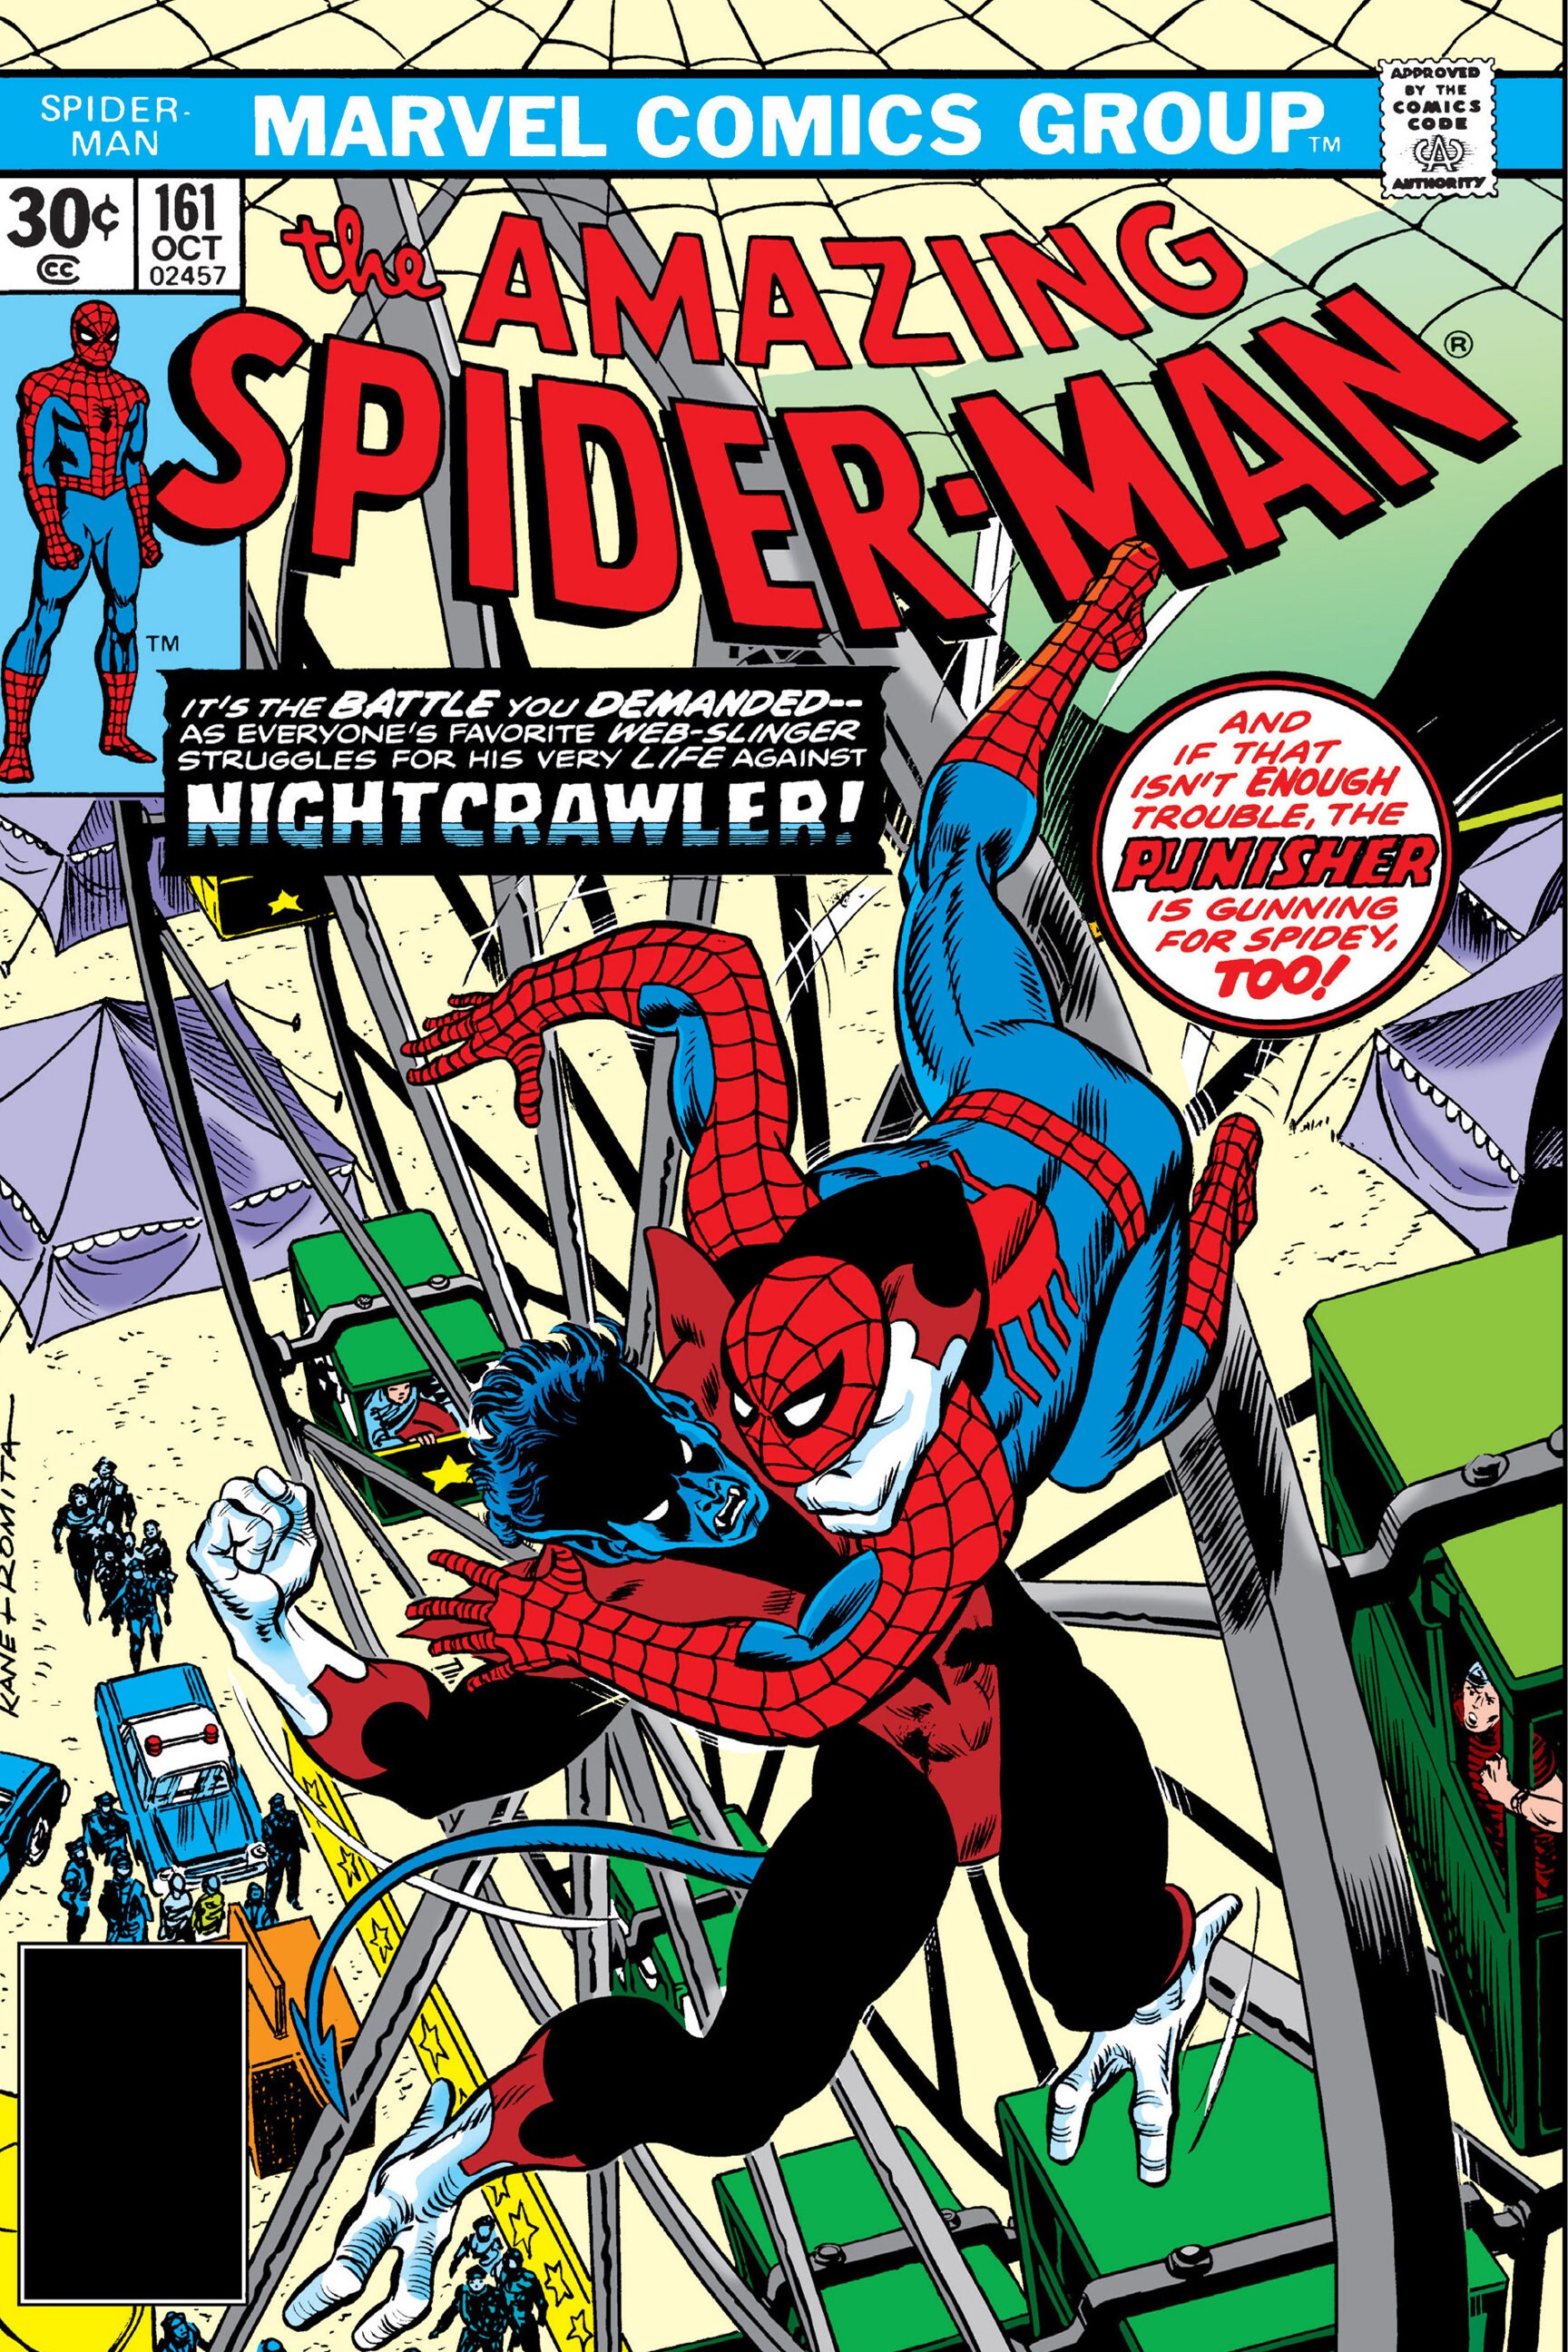 The Amazing Spider-Man Issue 161 Comic X-Men Nightcrawler Poster